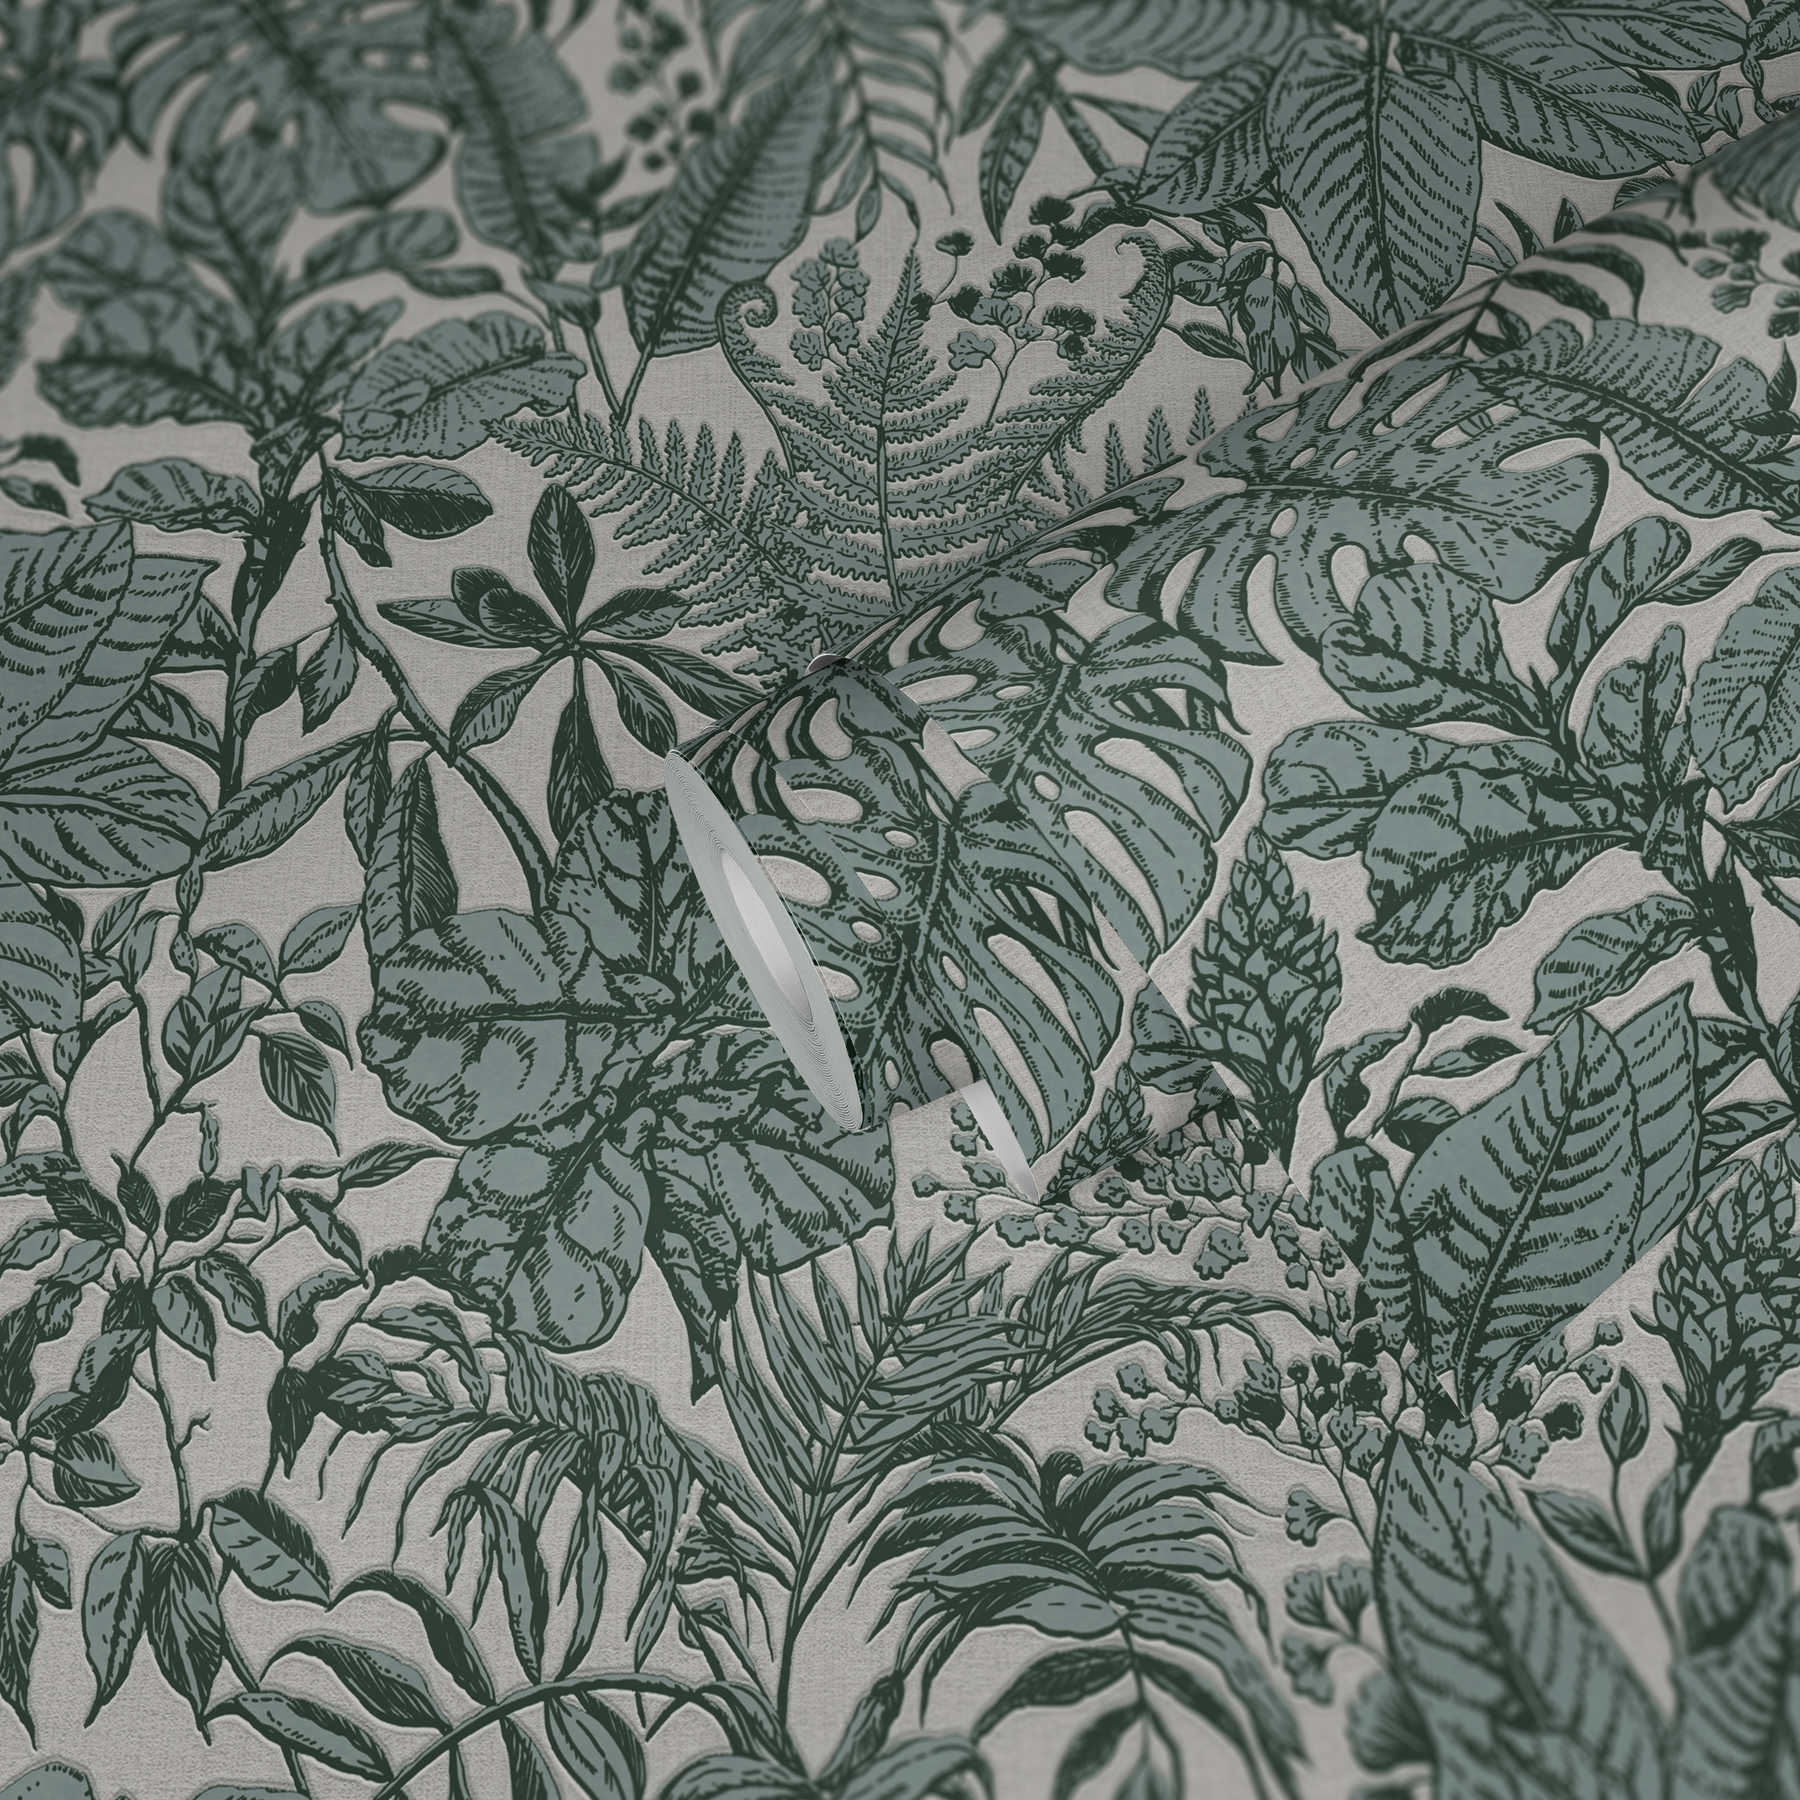             Tapete Dschungel Blätter, Monstera & Farne – Grün, Weiß, Grau
        